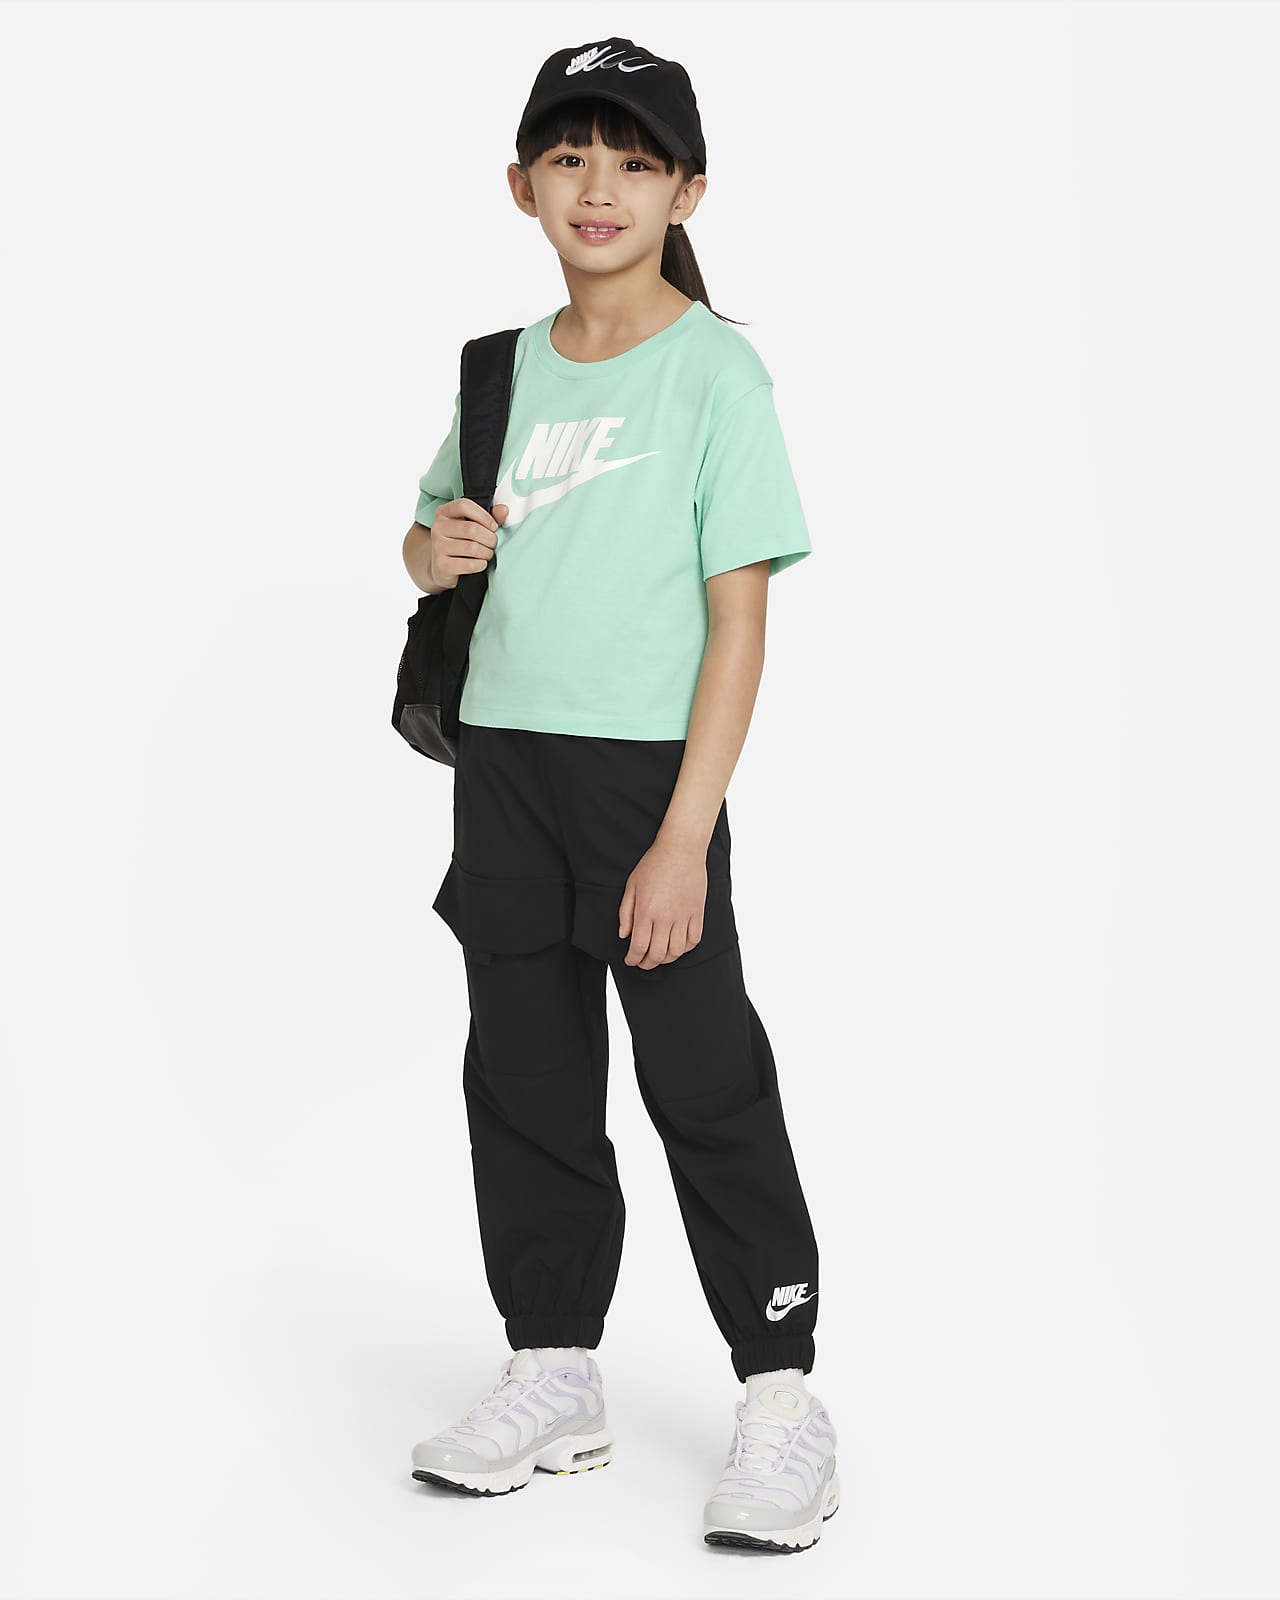 Little Tee Boxy Kids Nike T-Shirt. Club